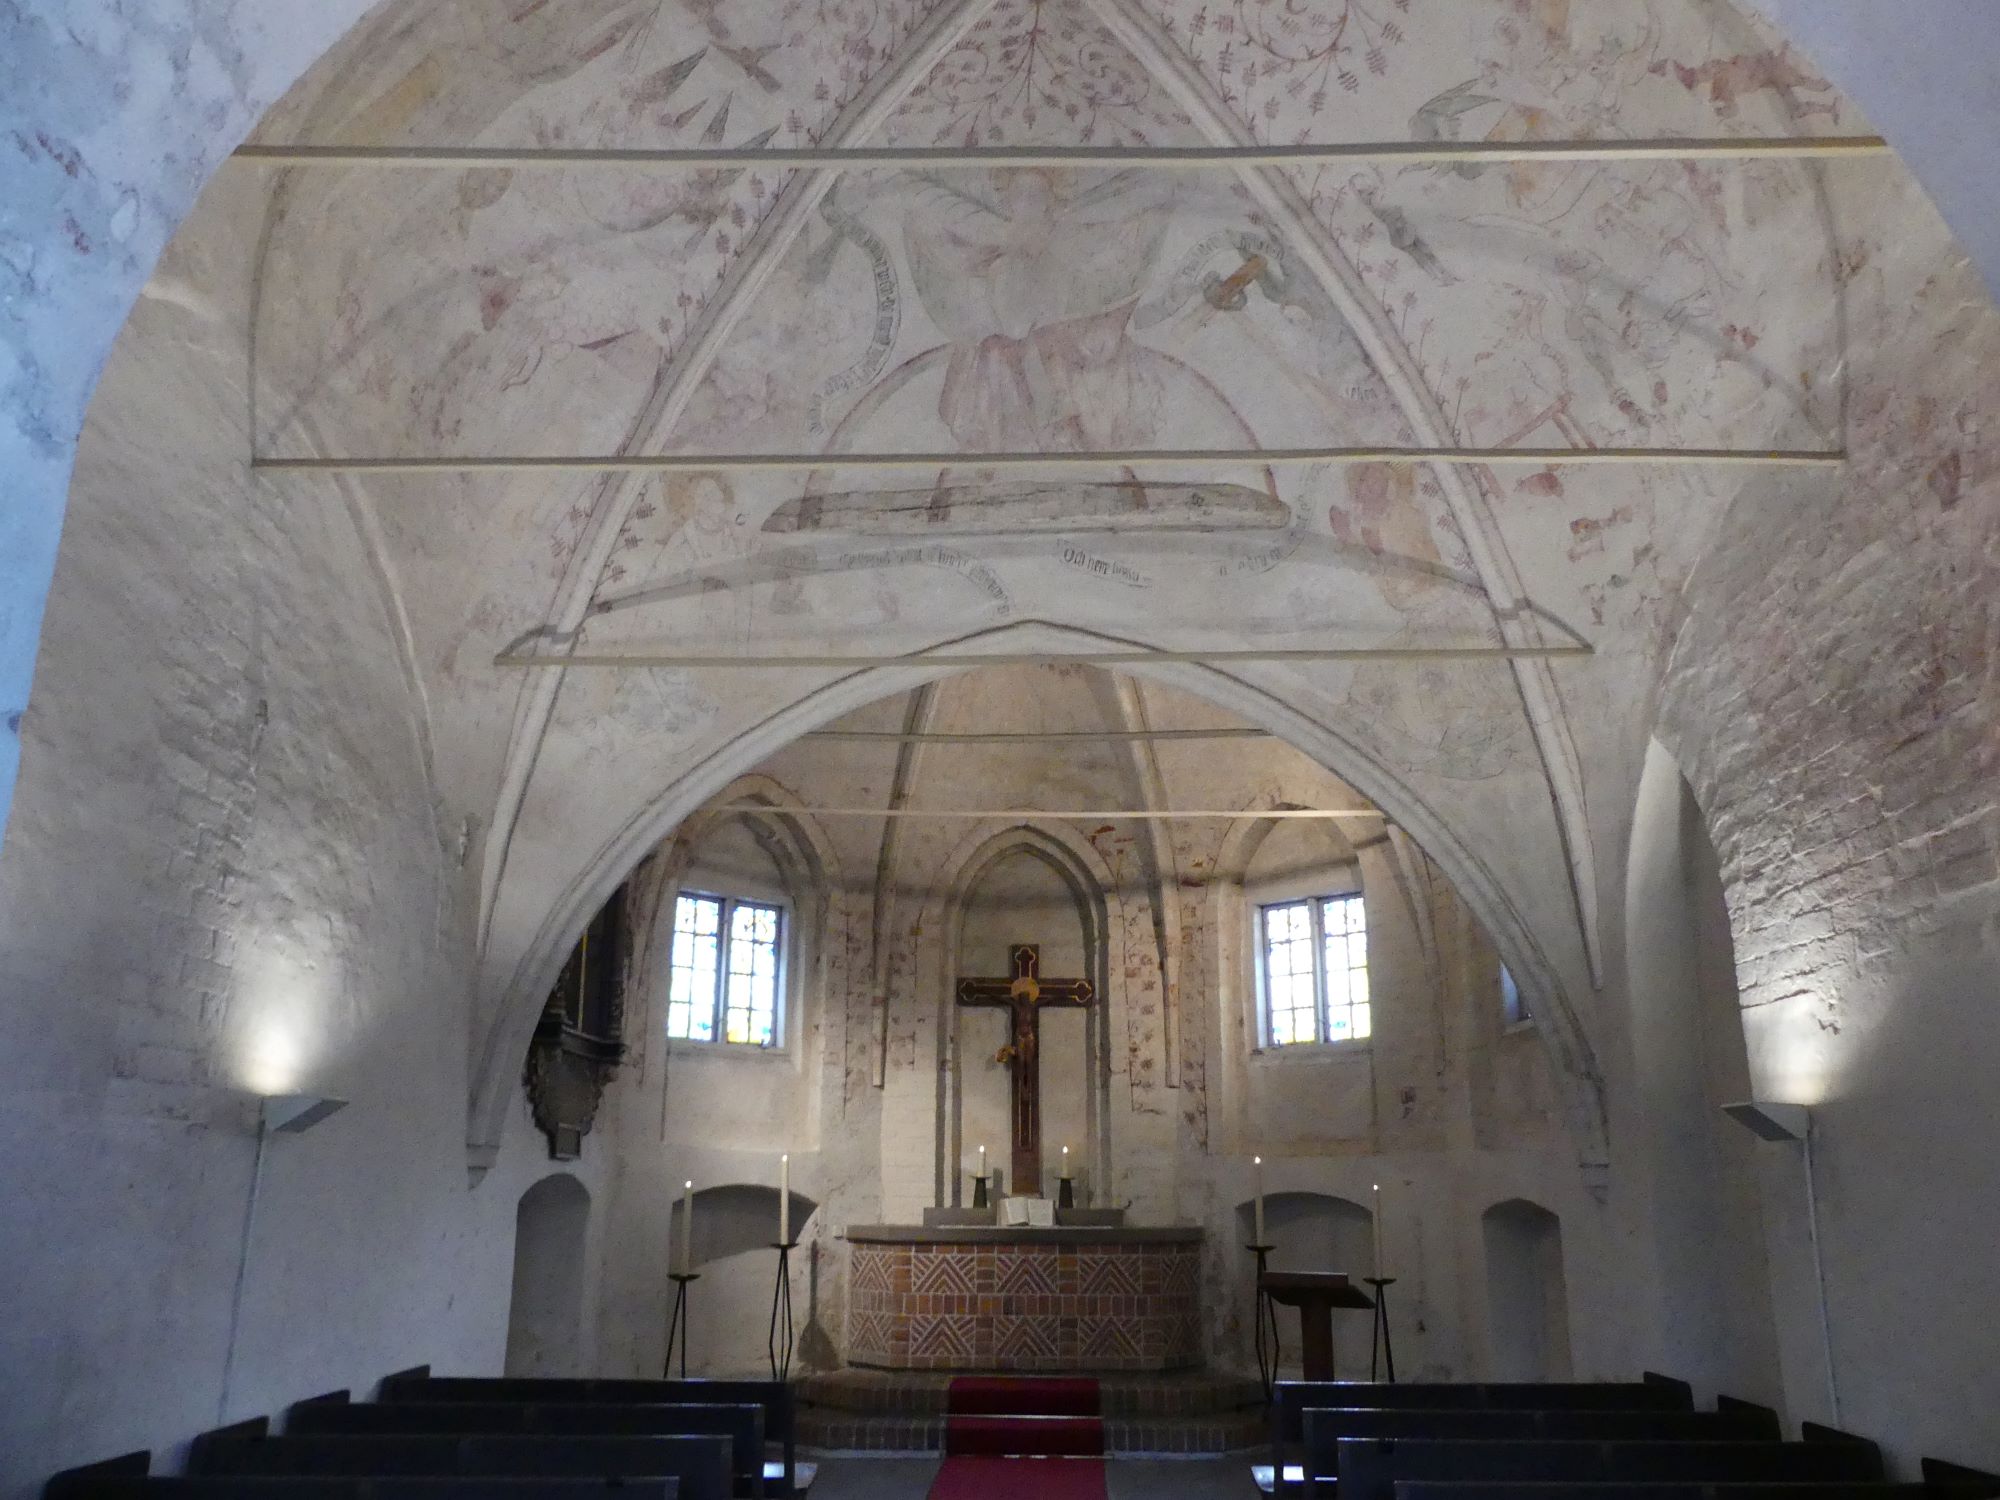 St. Gertruden-Kapelle Gewölbe mit Kreuz; Foto: Martin Frebel